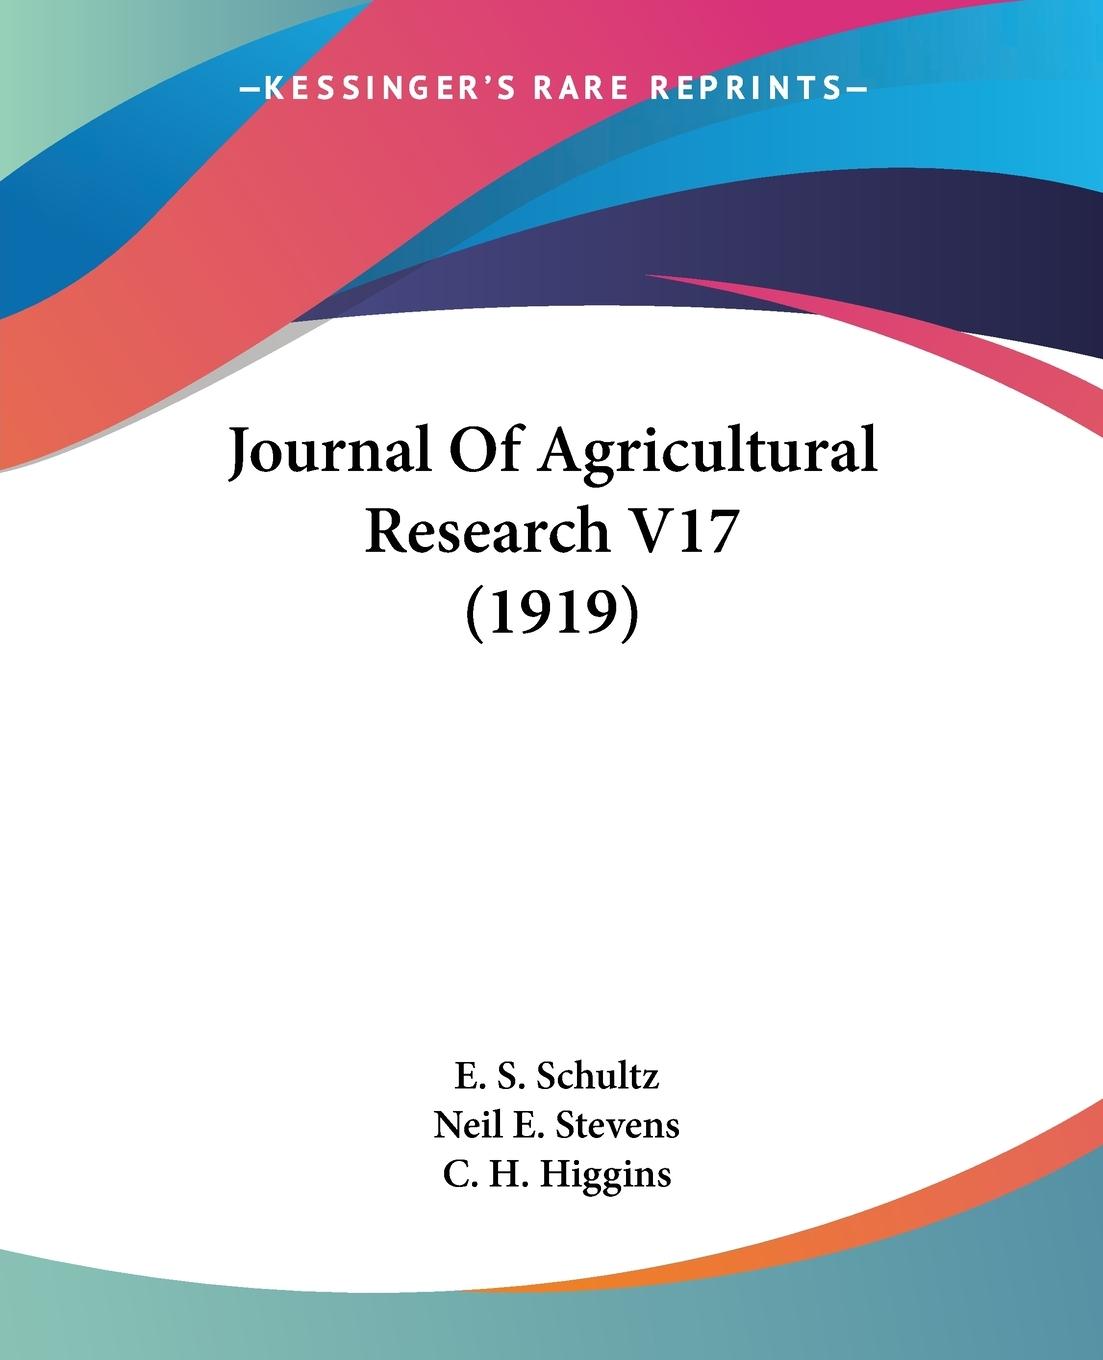 Journal Of Agricultural Research V17 (1919) - Schultz, E. S. Stevens, Neil E. Higgins, C. H.